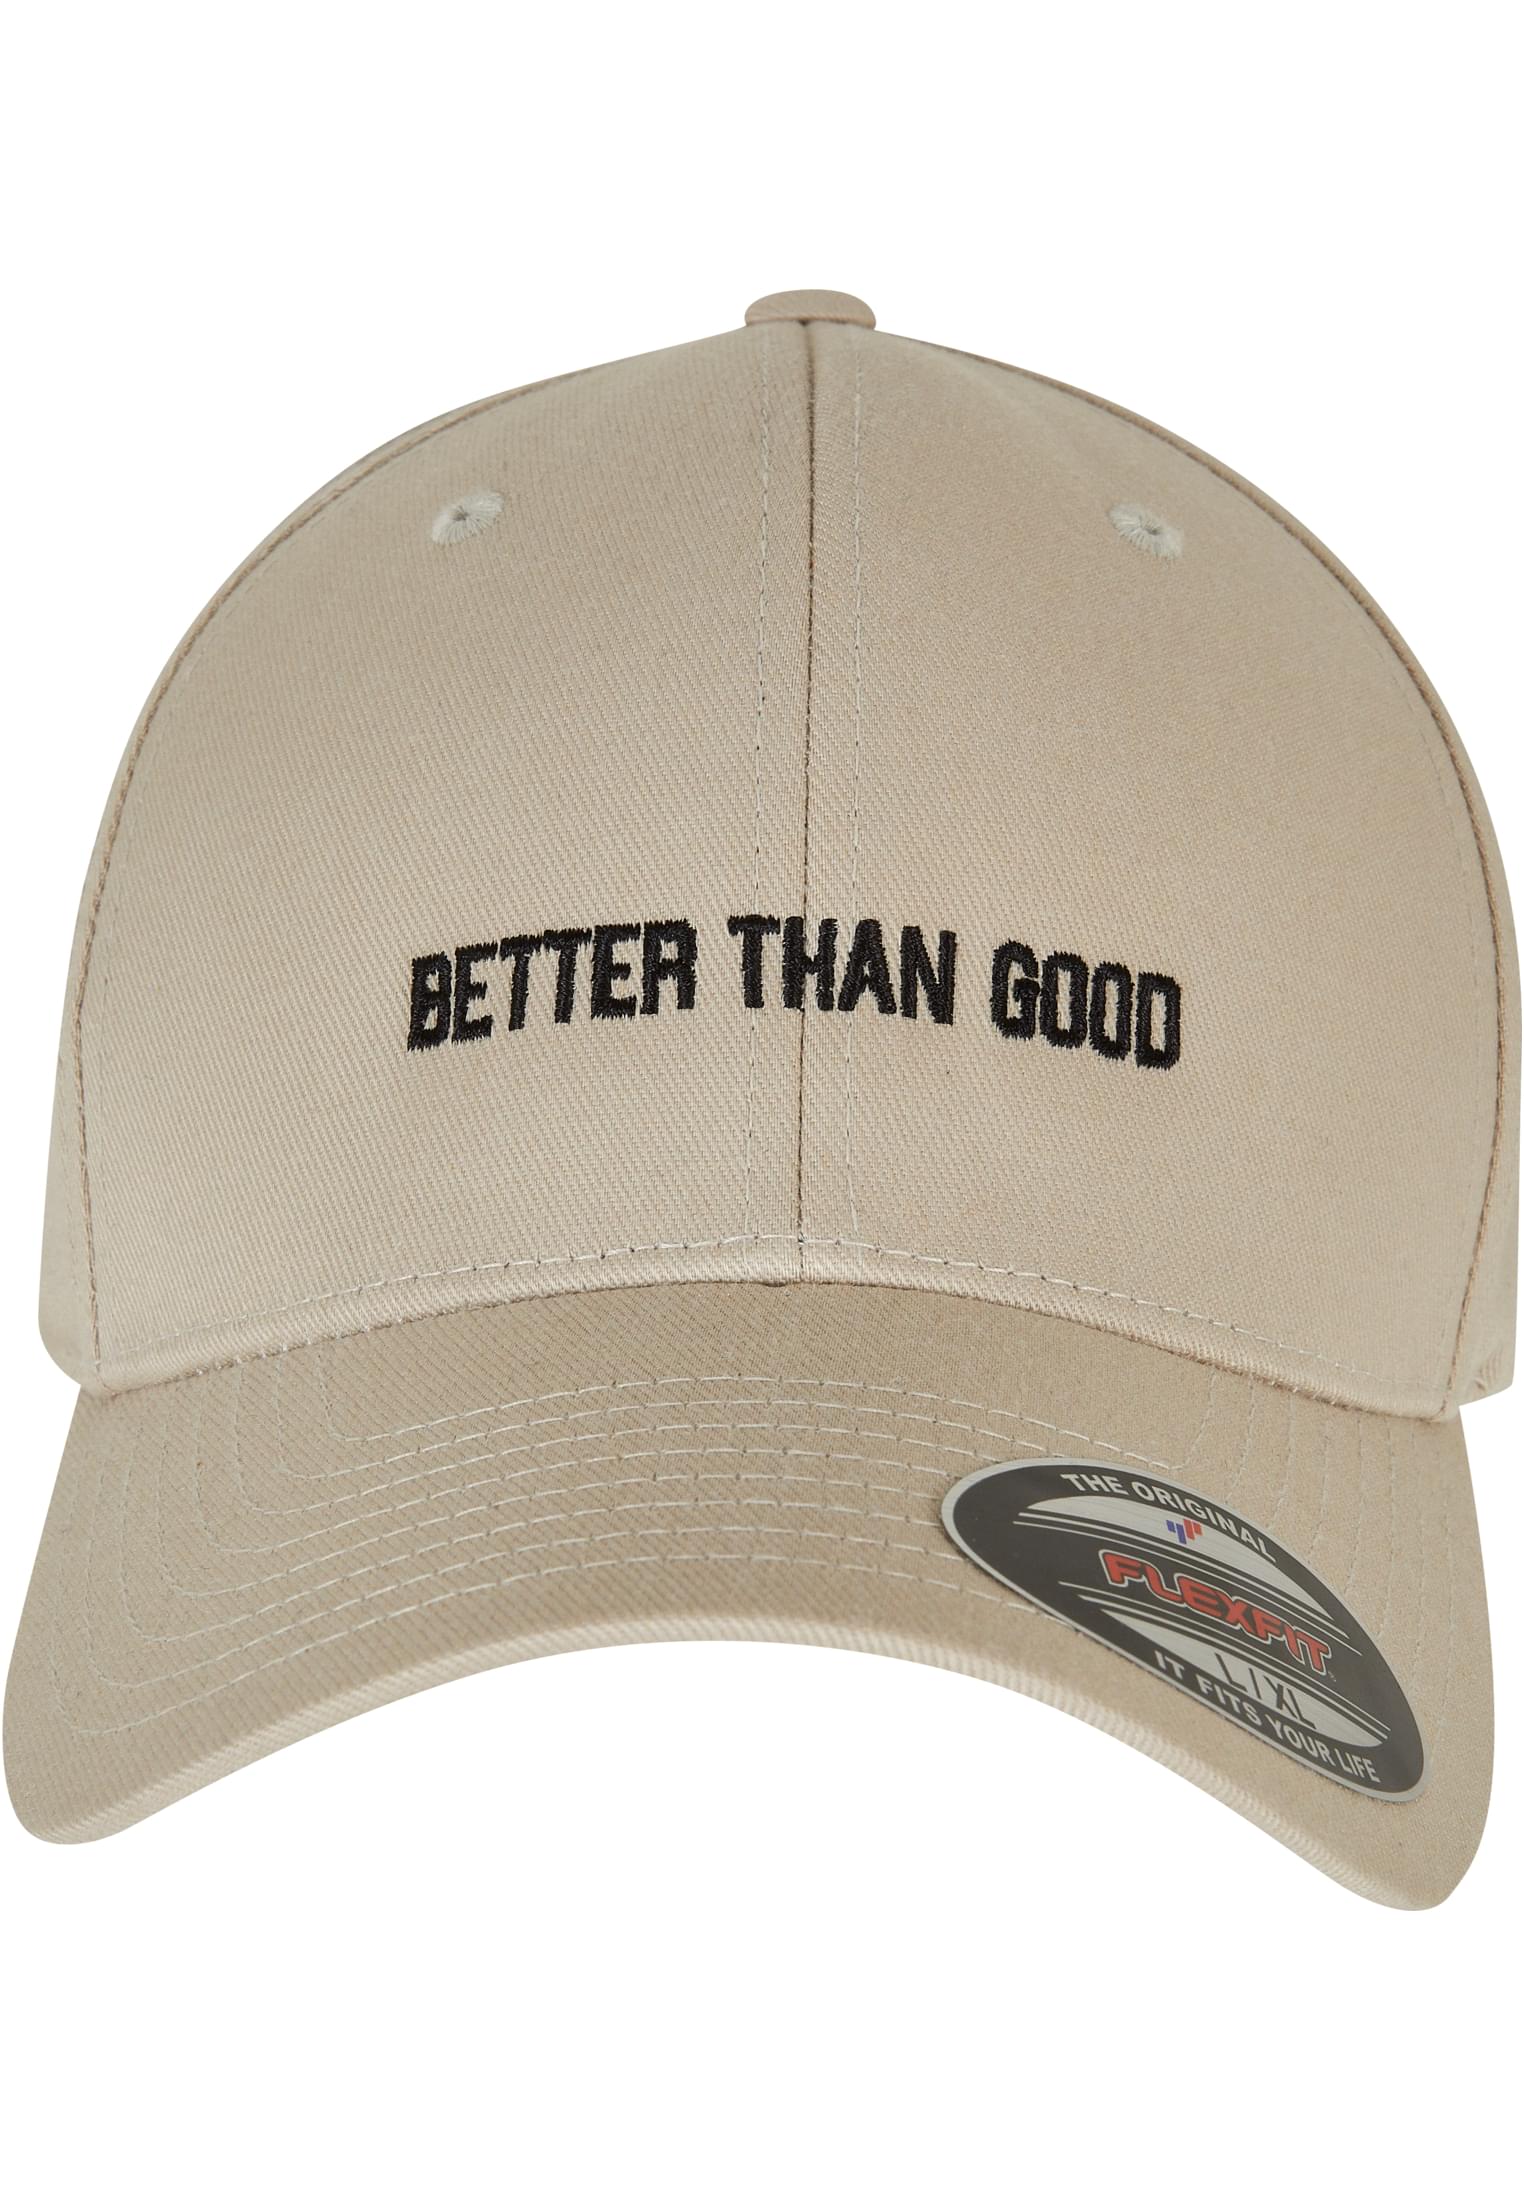 Better than a good Flexfit stone cap/black